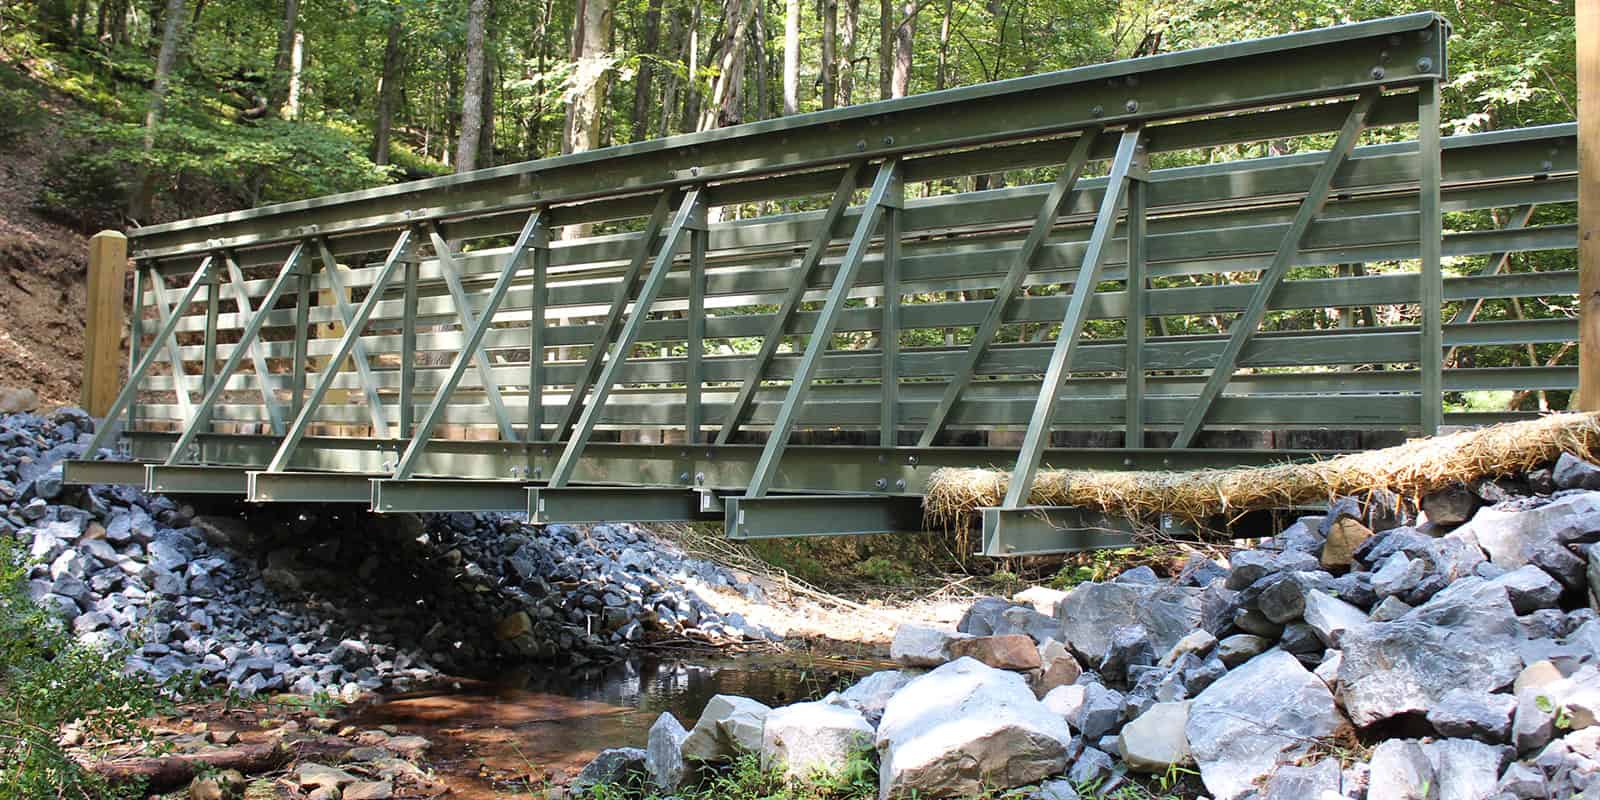 Green ReadySpan pedestrian bridge in a wooded area spanning a creek with rocks.